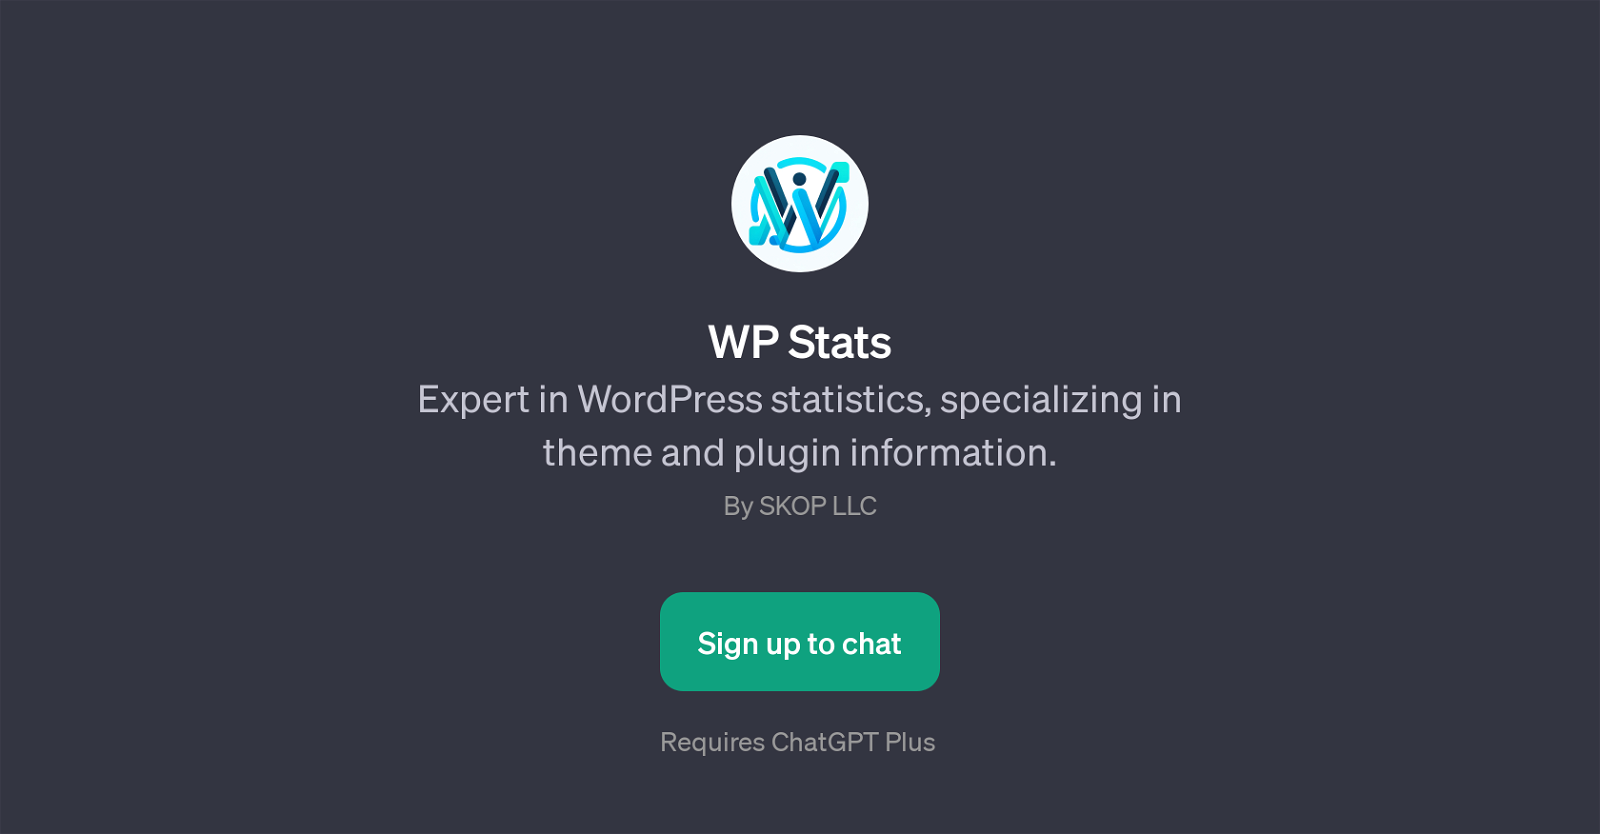 WP Stats website